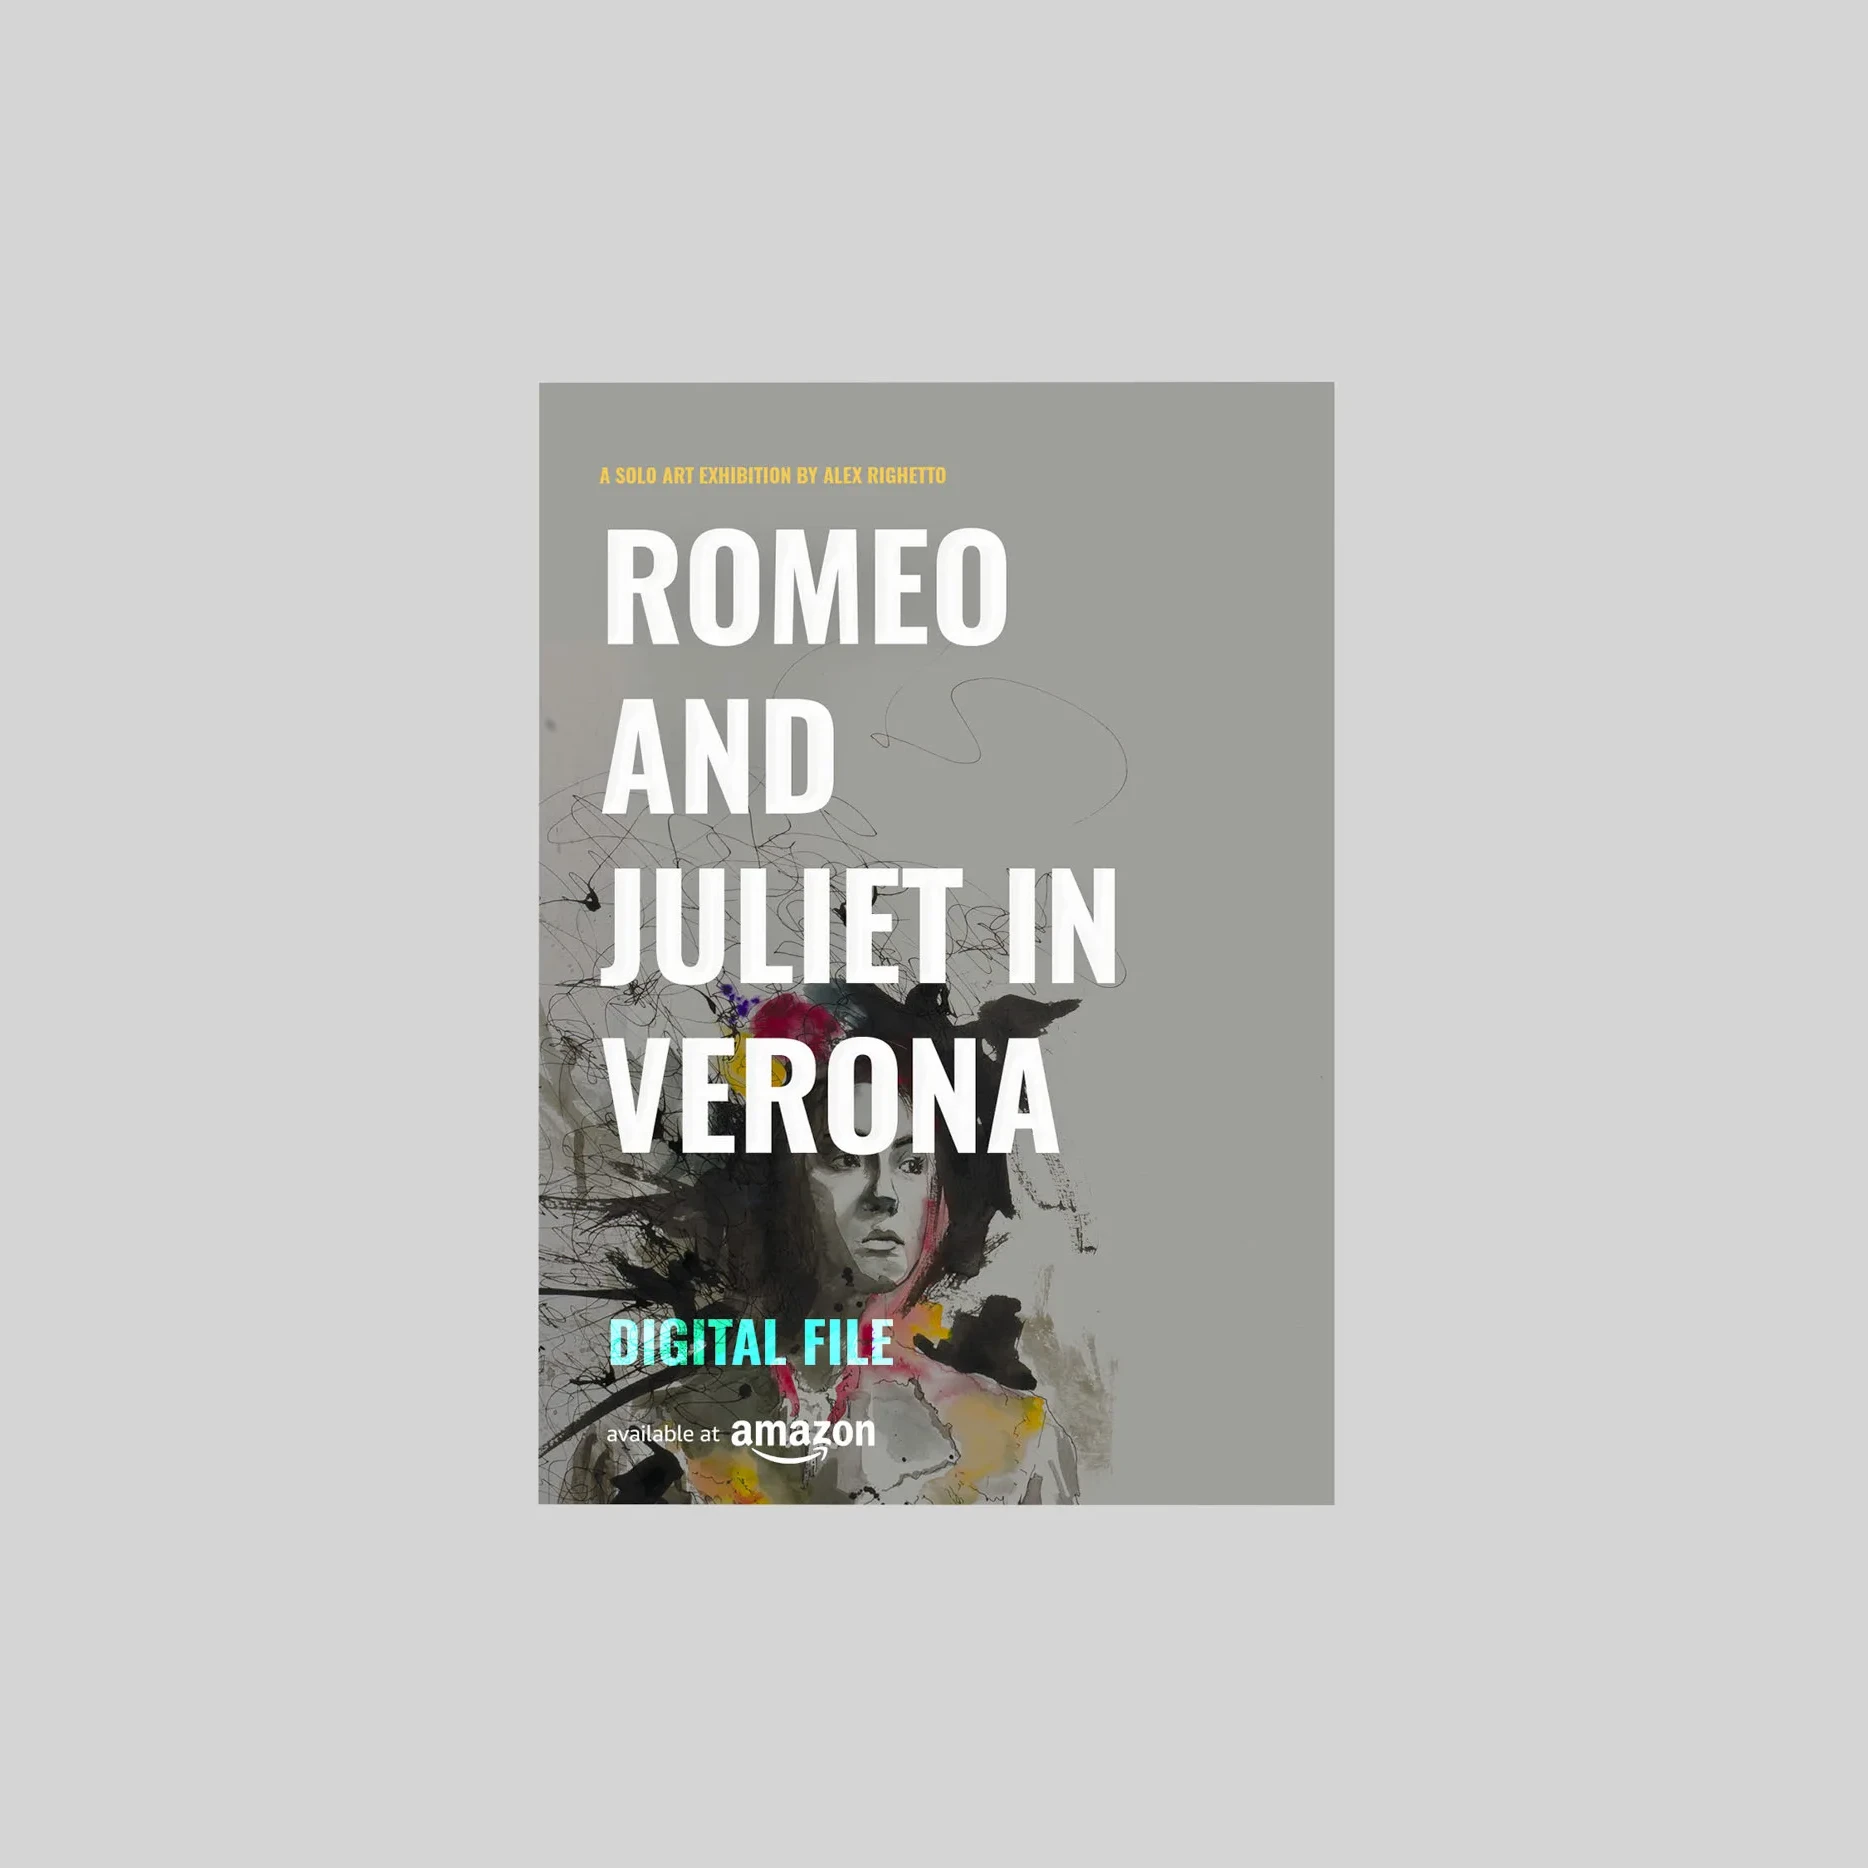 artwork book romeo and juliet alex righetto 03092024 2 jpg uai